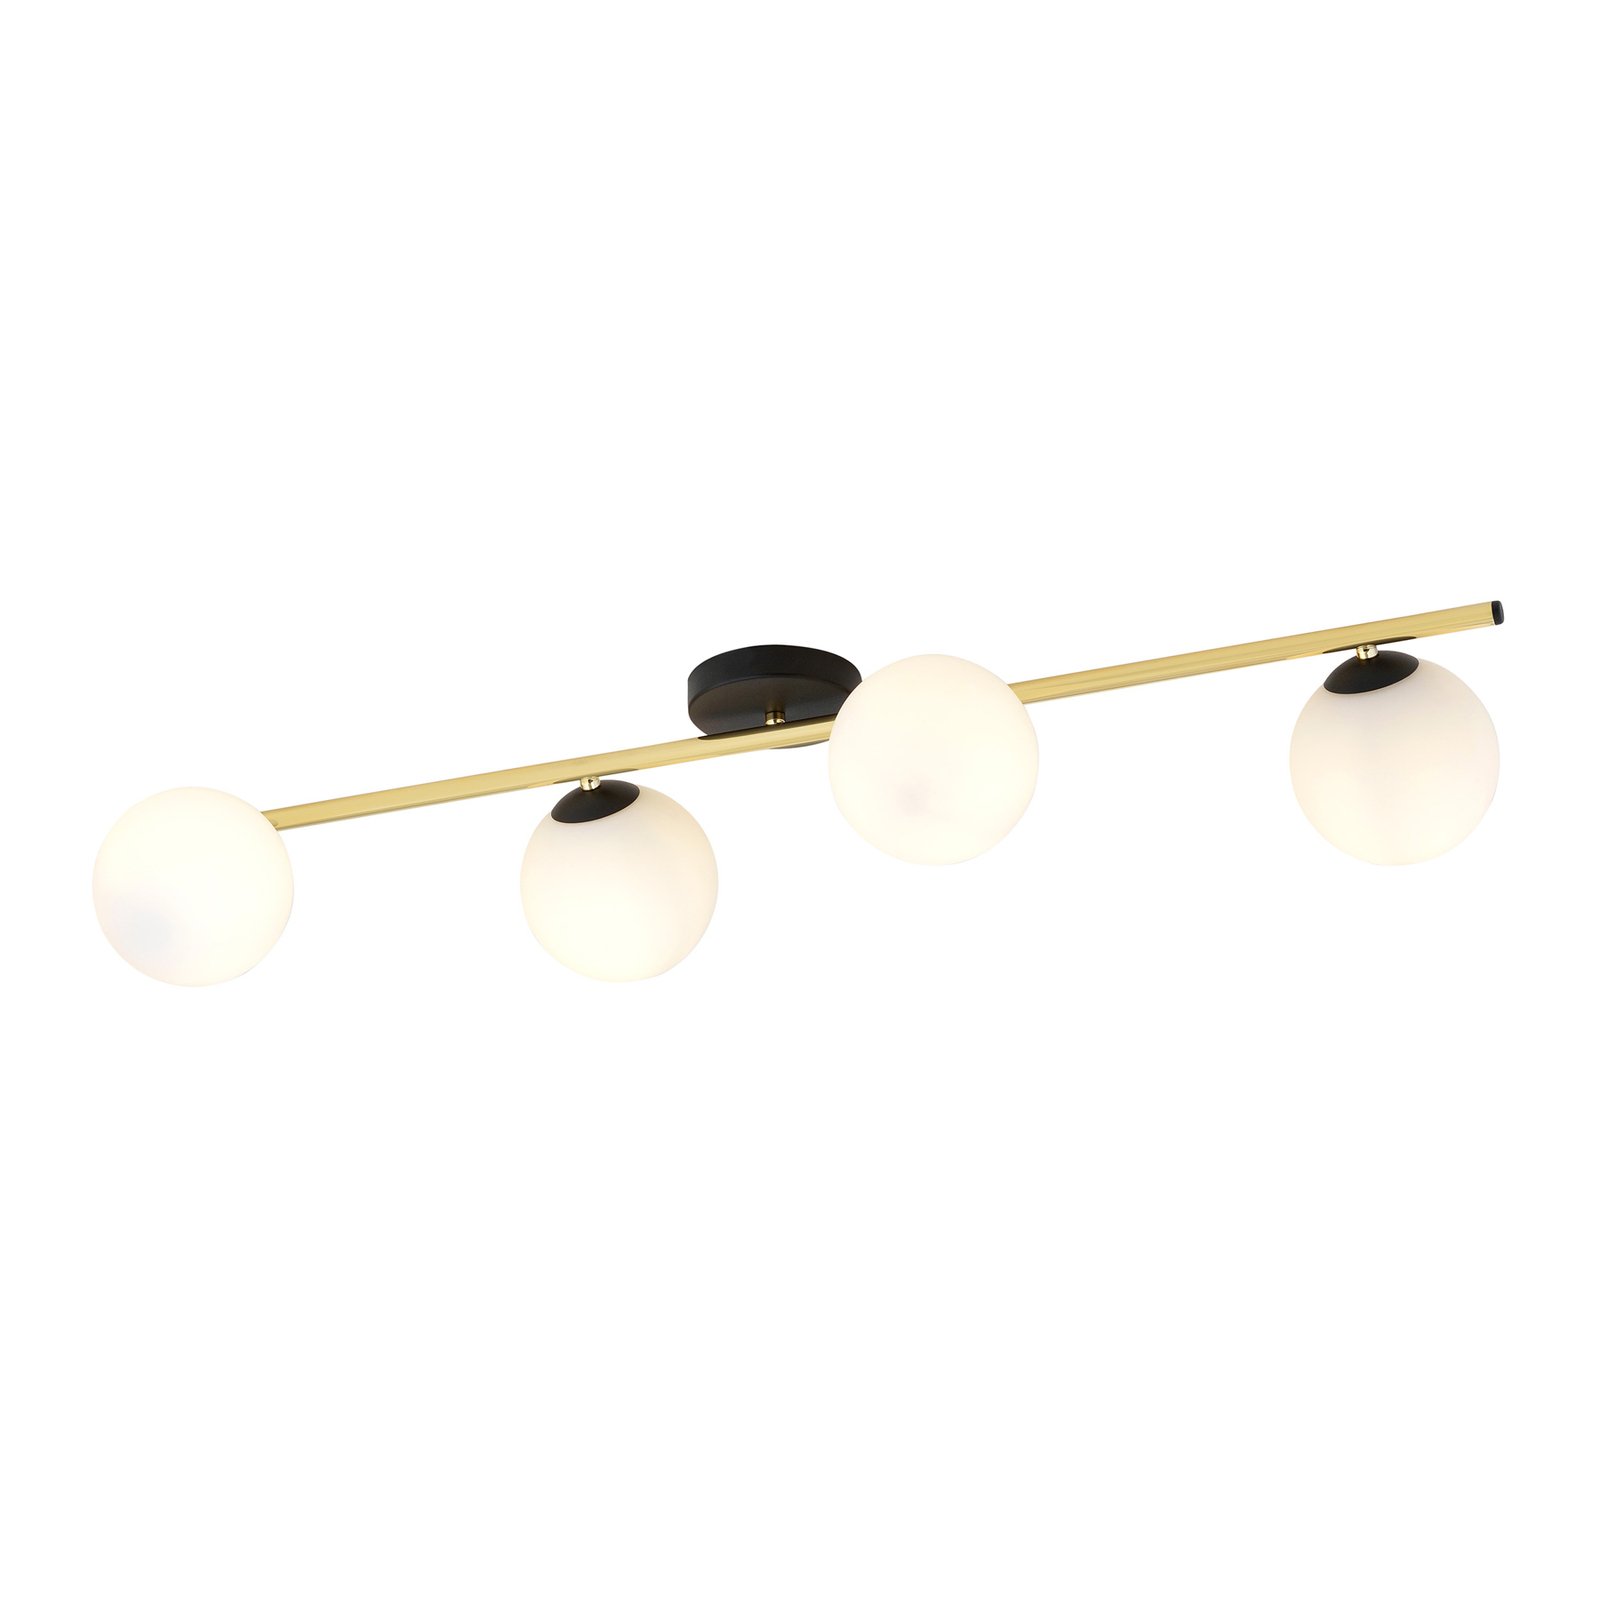 Ceiling lamp Glassy 4-bulb linear black/gold/opal